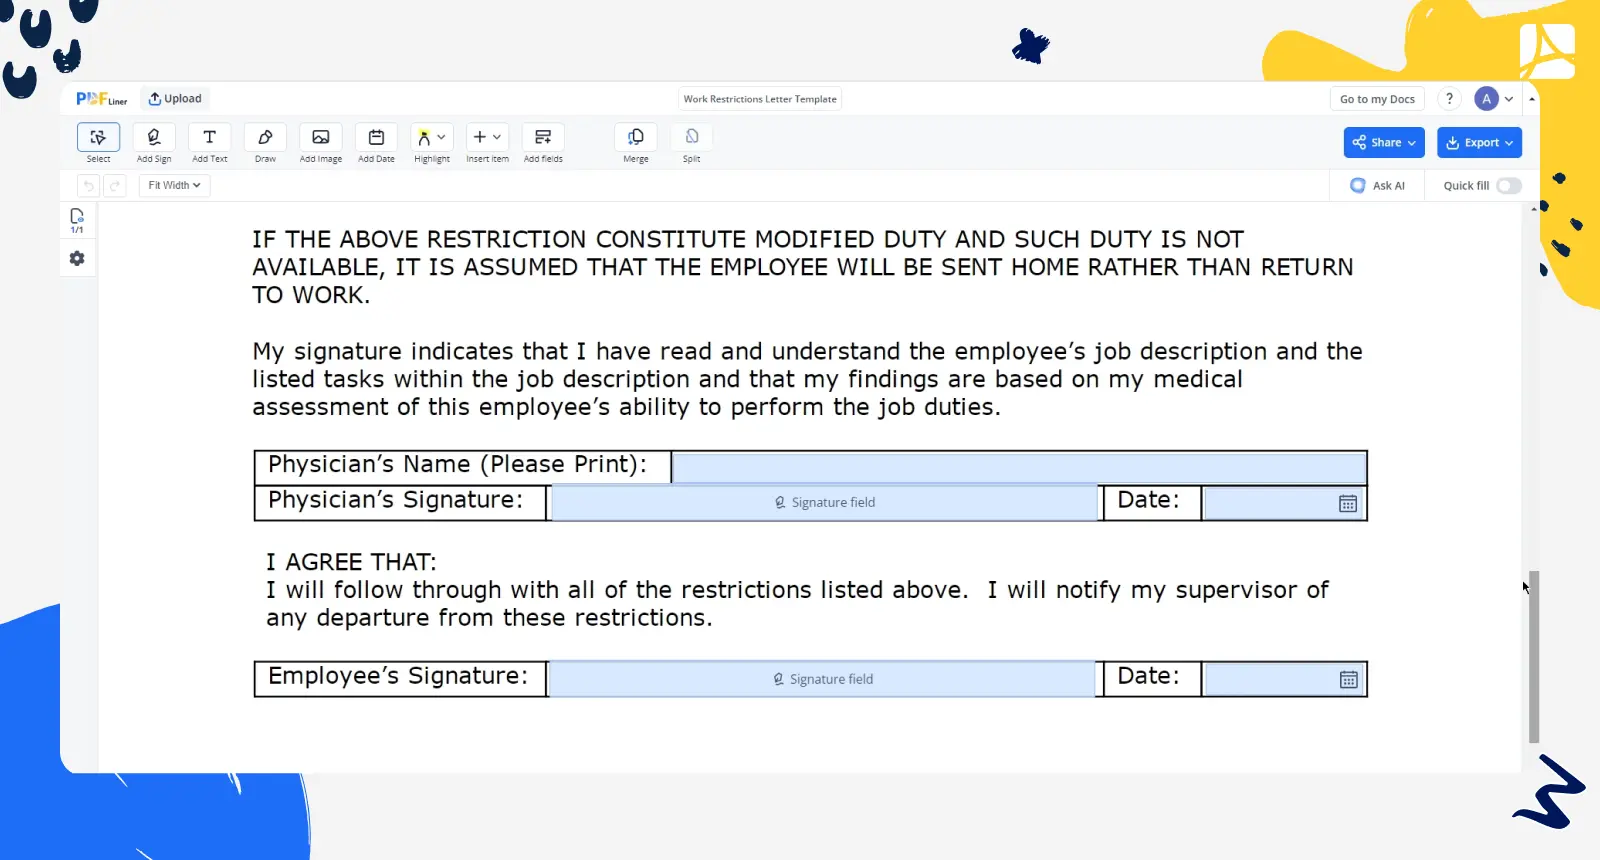 work restrictions letter template screenshot